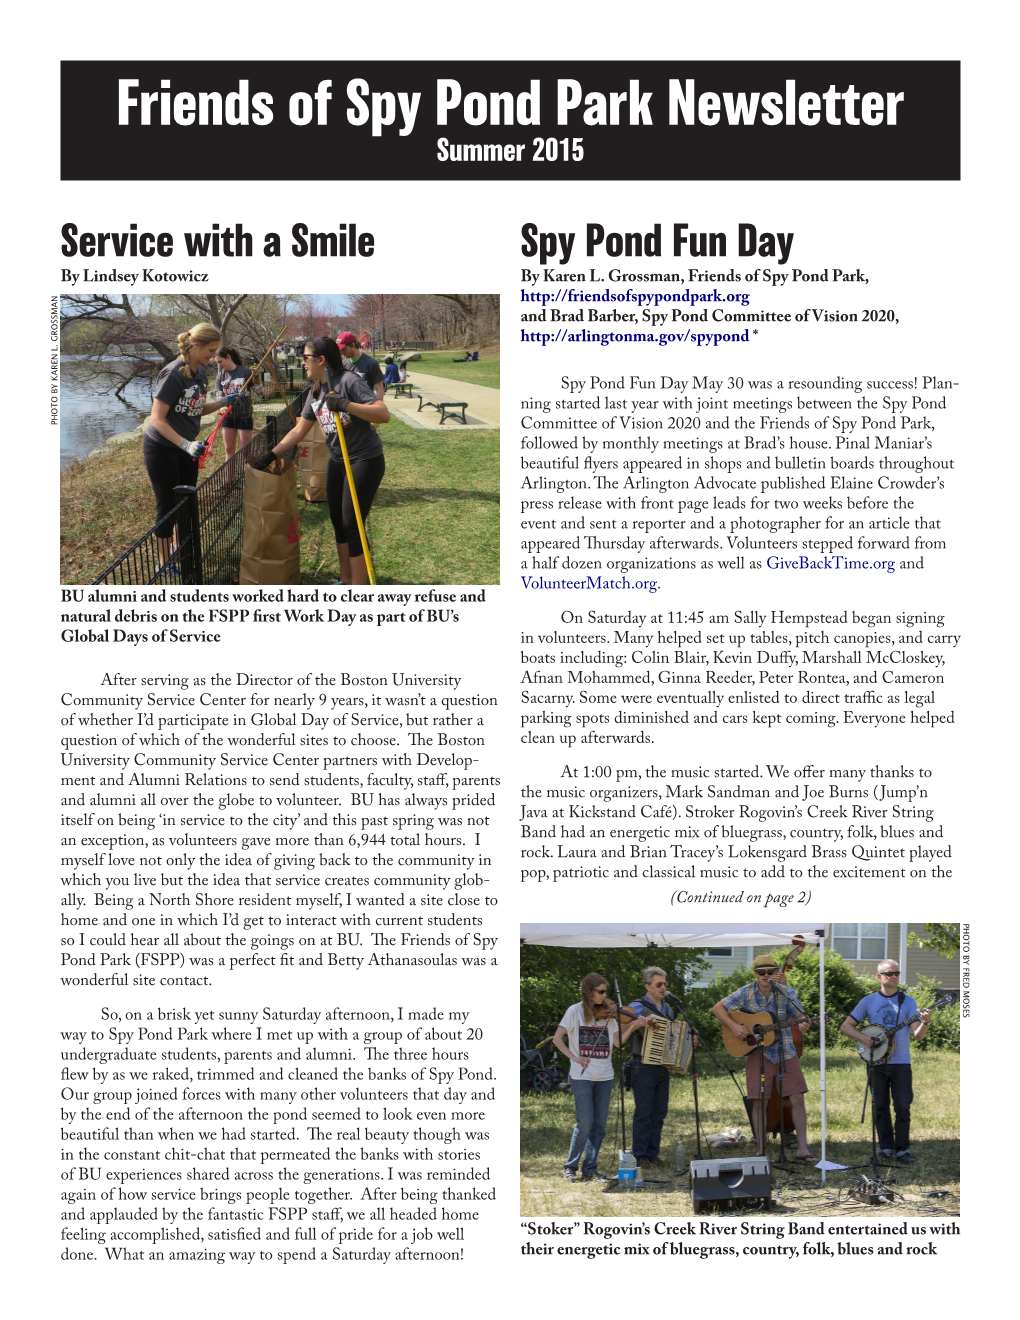 Friends of Spy Pond Park Newsletter Summer 2015